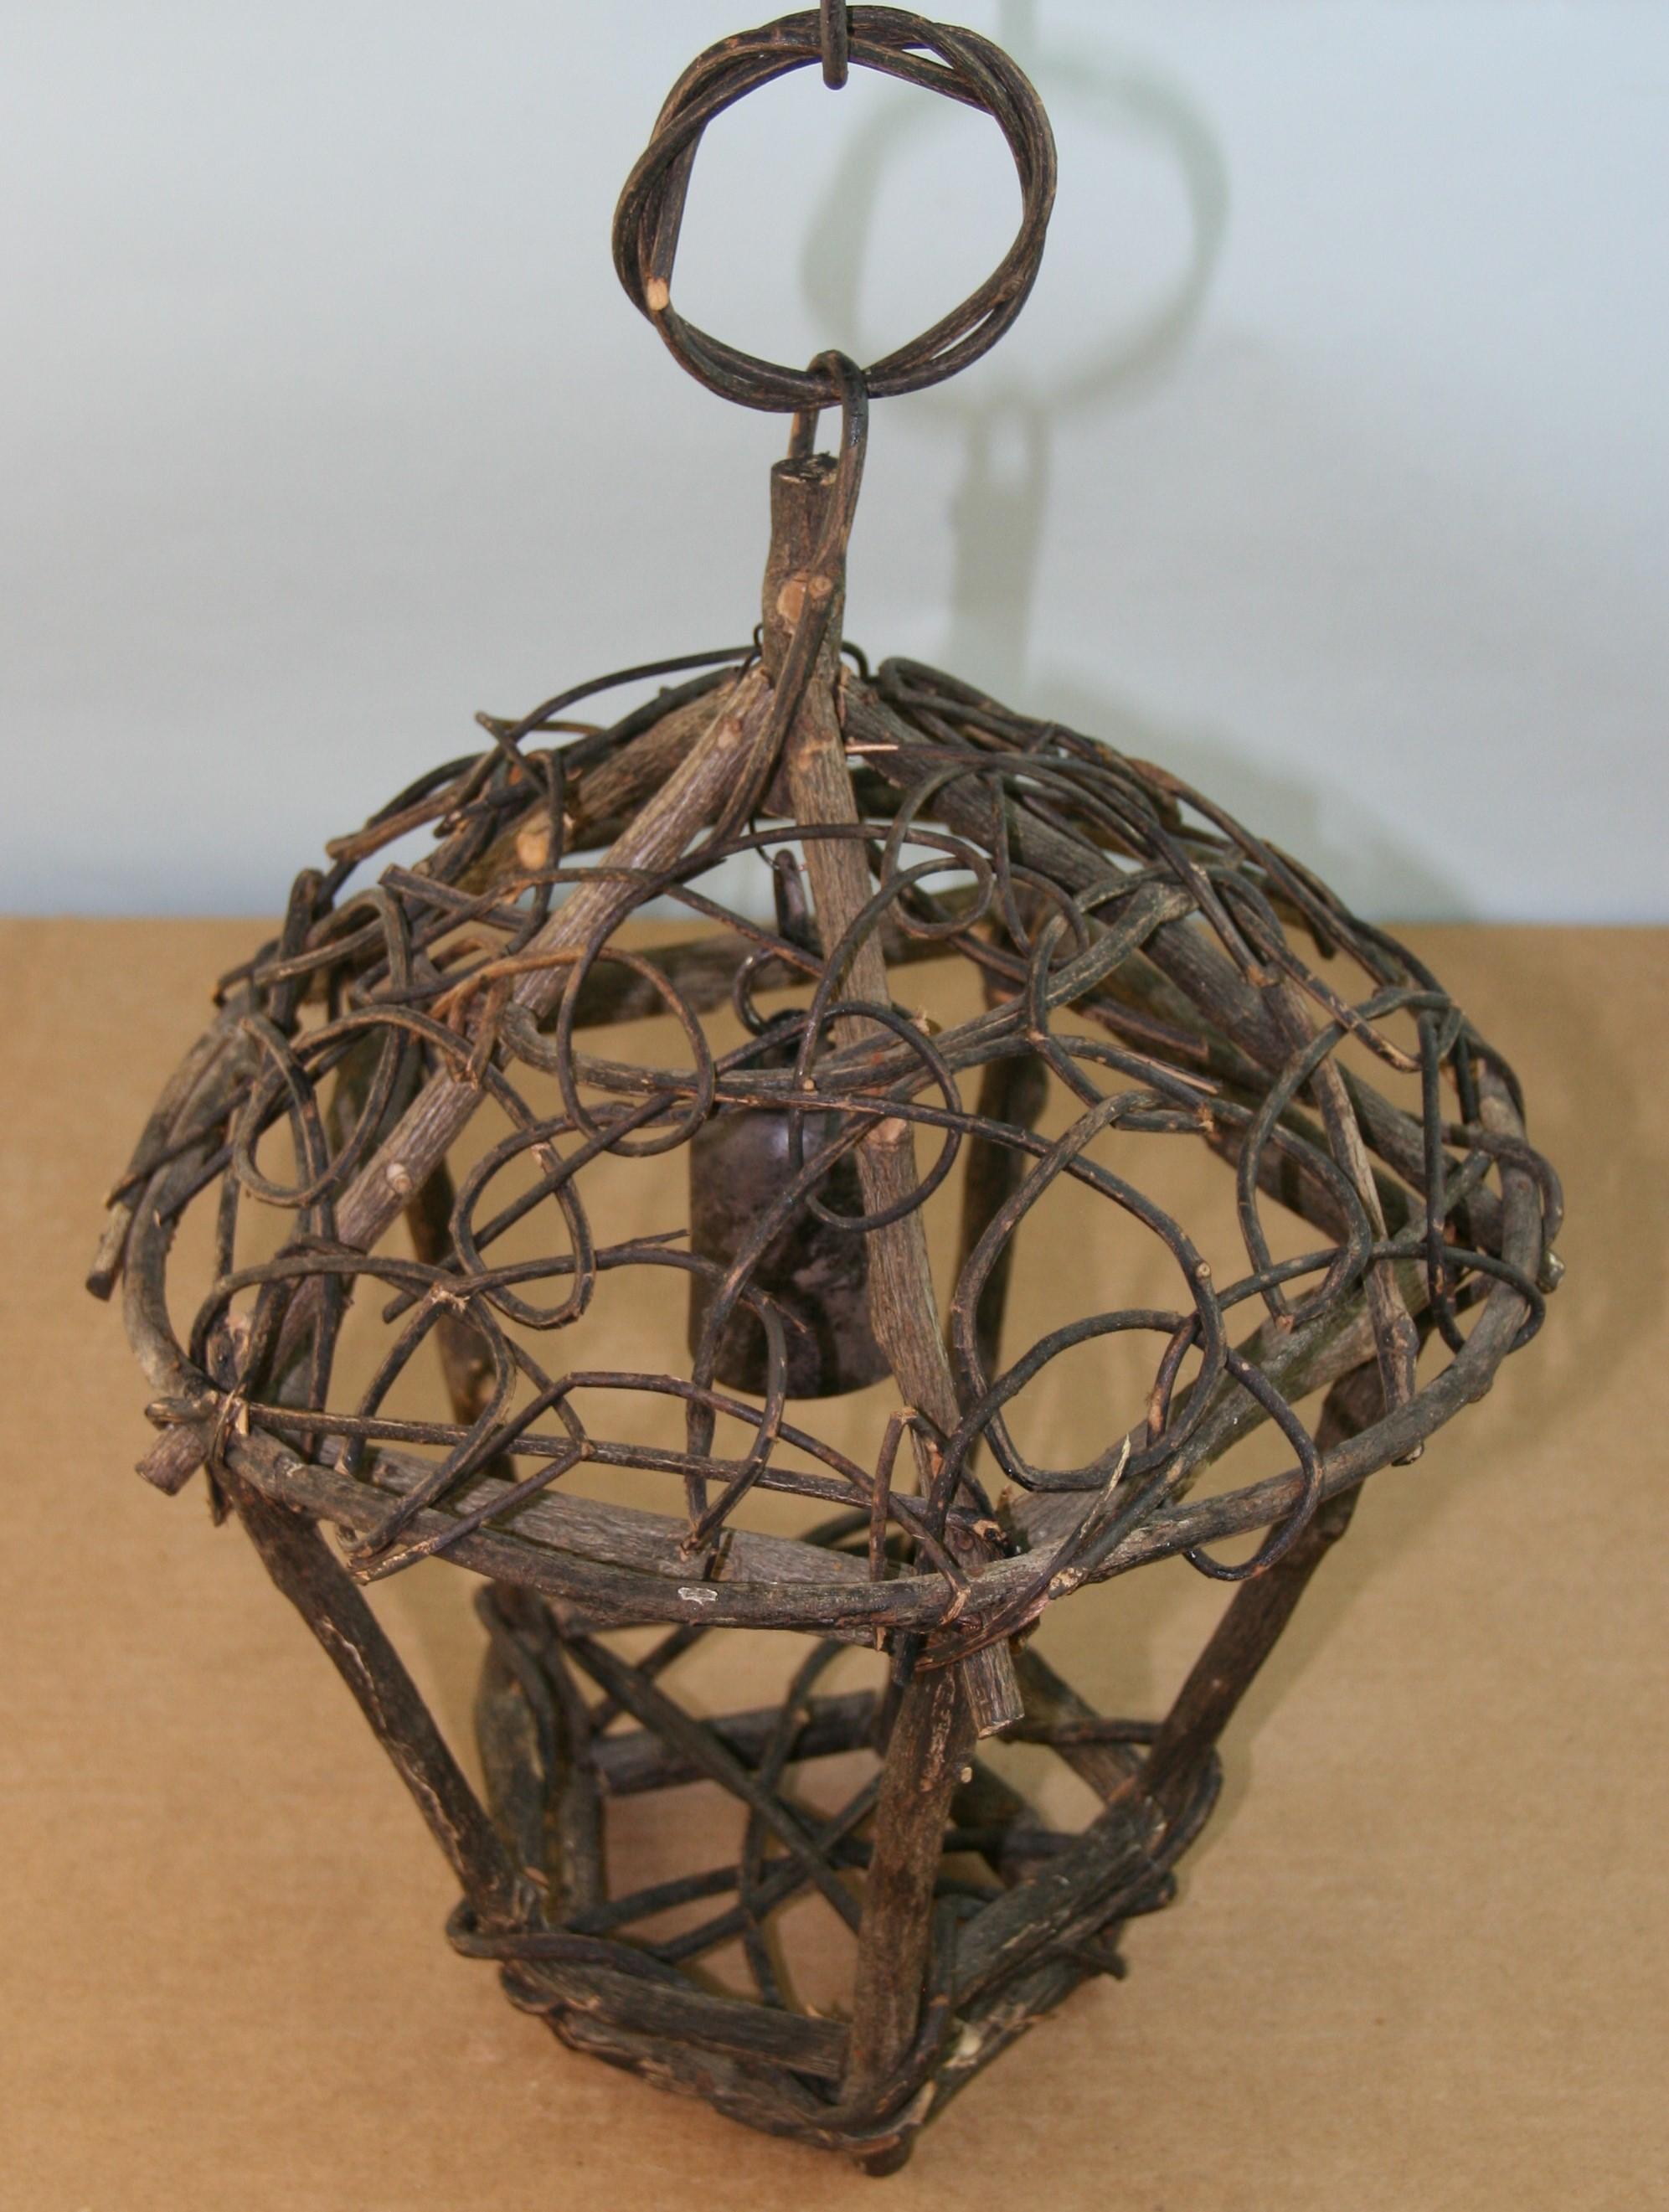 3-1025 Folk Art hand made twig lantern.
Take one 60 watt Edison based bulb
Measures: Height to top of loop 16